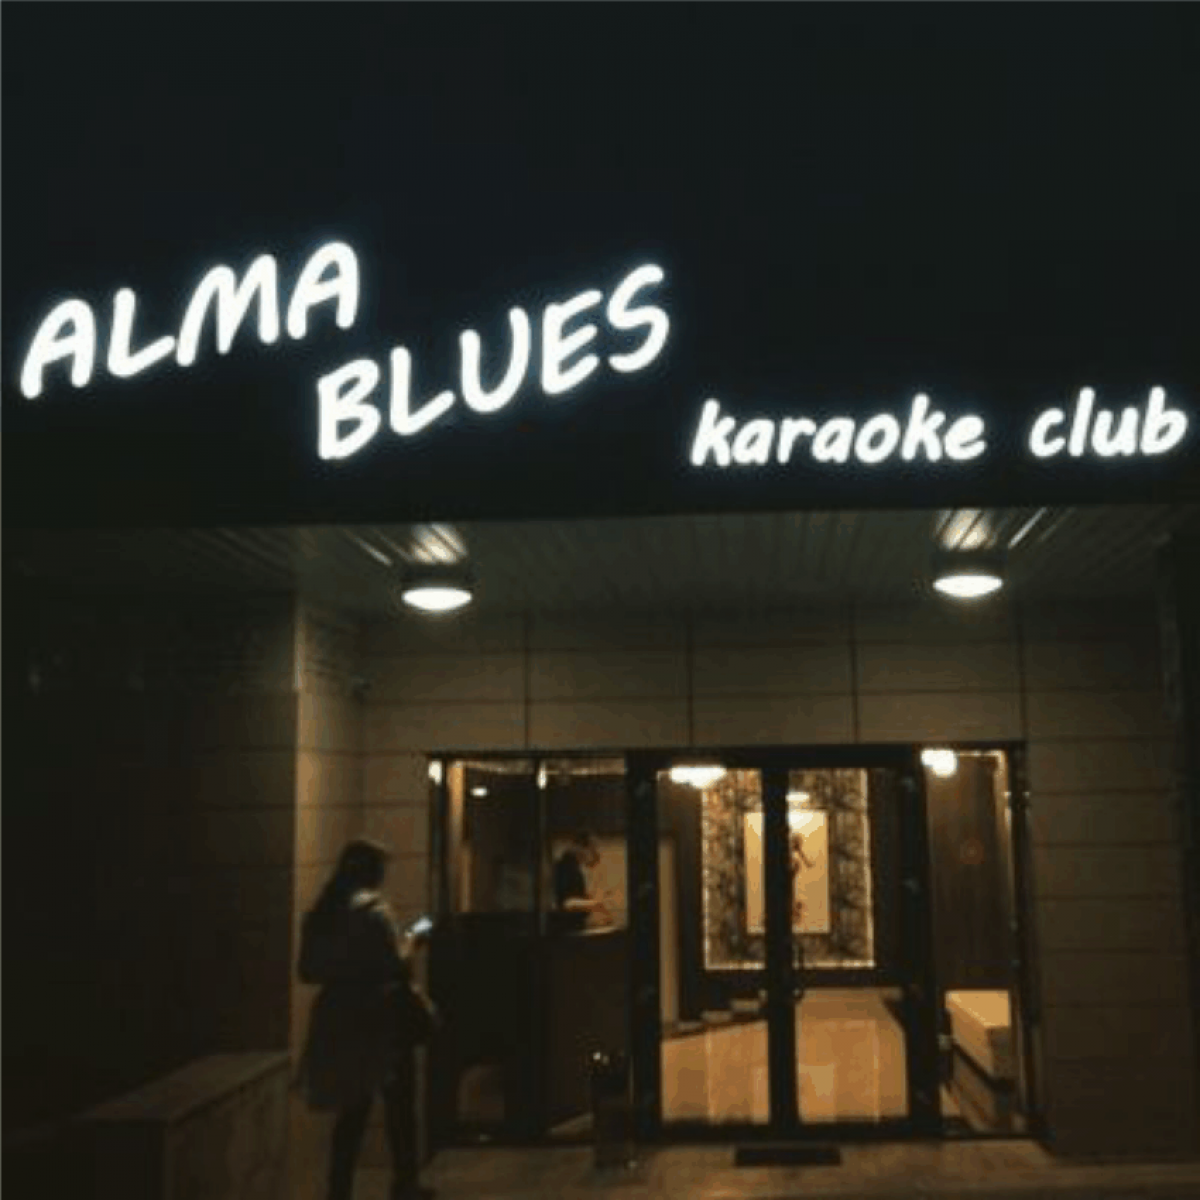 Alma blues